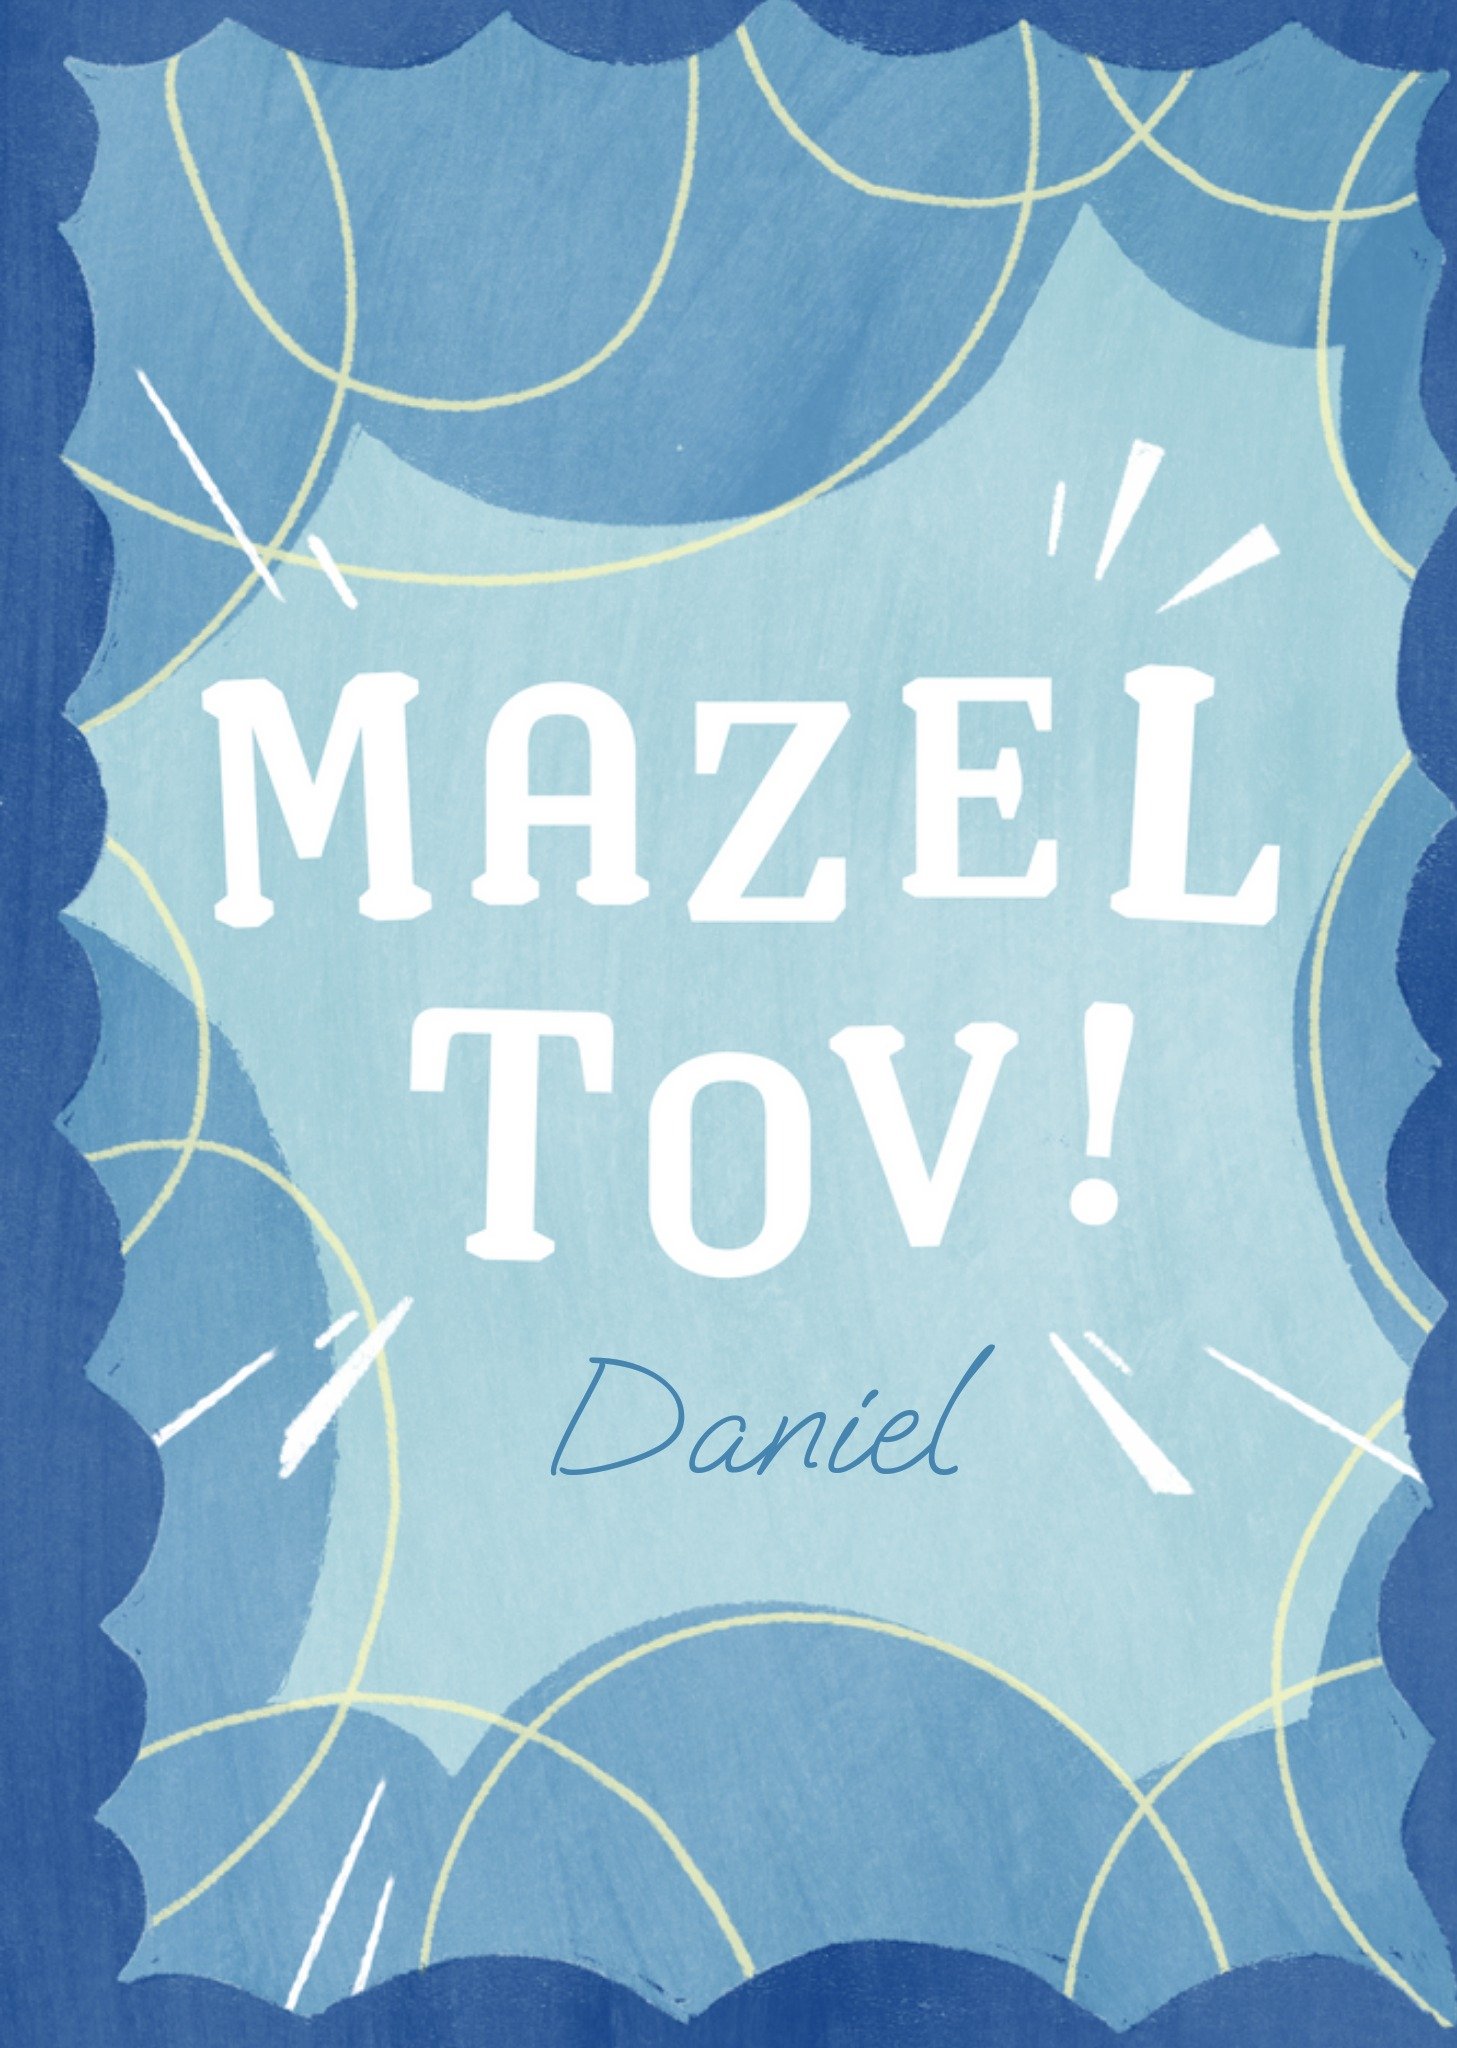 Moonpig Mazel Tov Hanukkah Card, Large